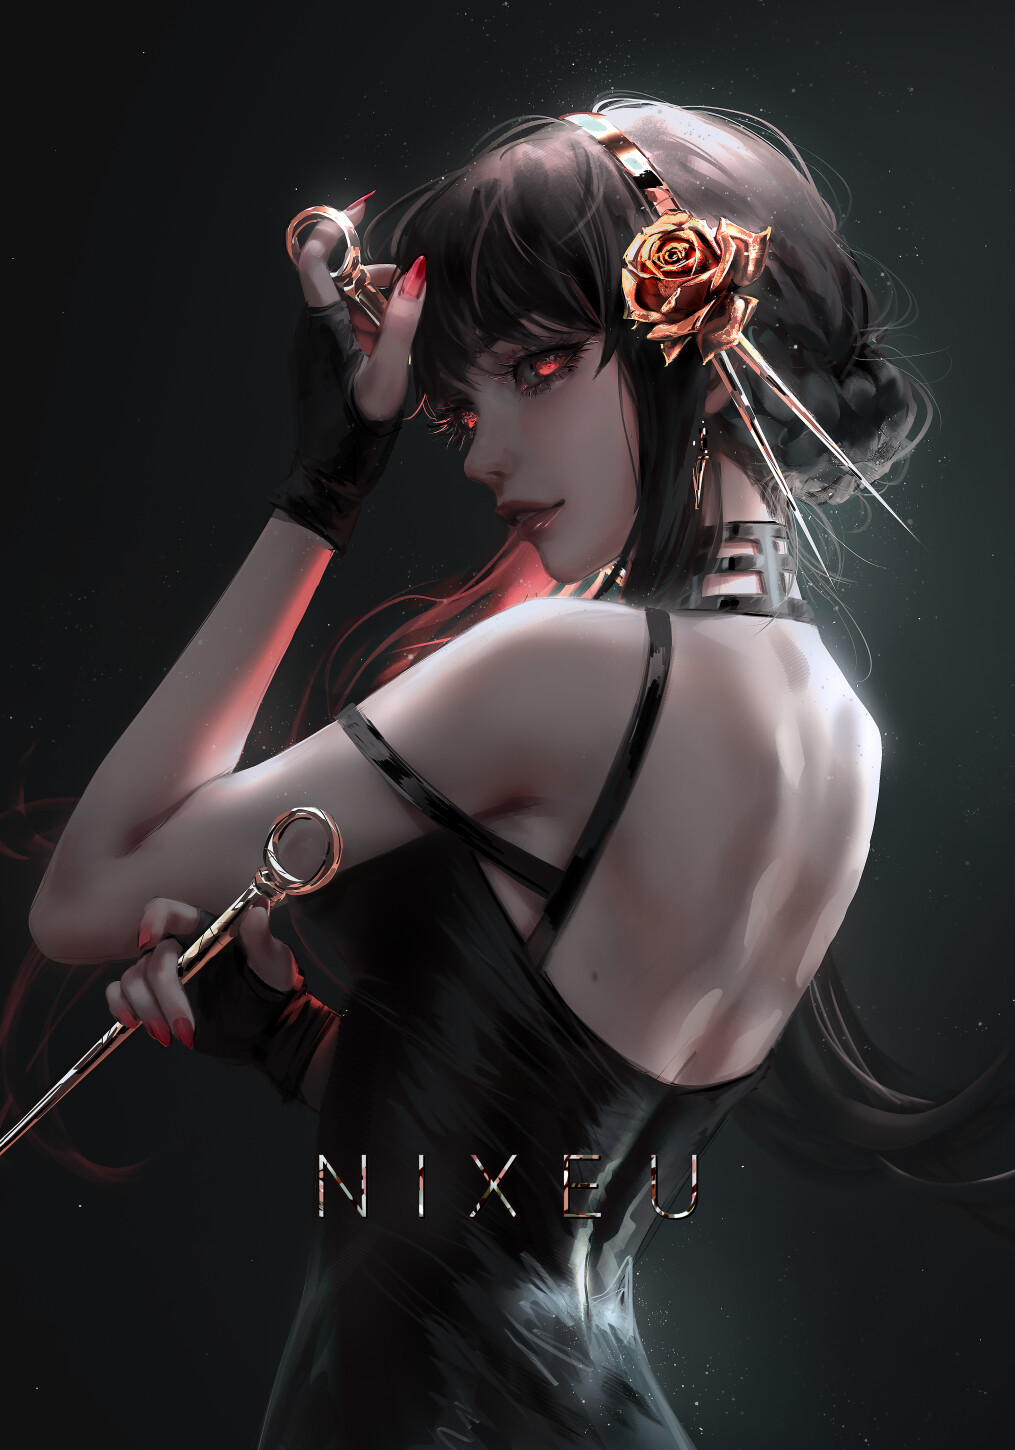 Nixeu Drawing Women Brunette Red Nails Flower In Hair Red Eyes Rose Dress Black Clothing Simple Back 1015x1450